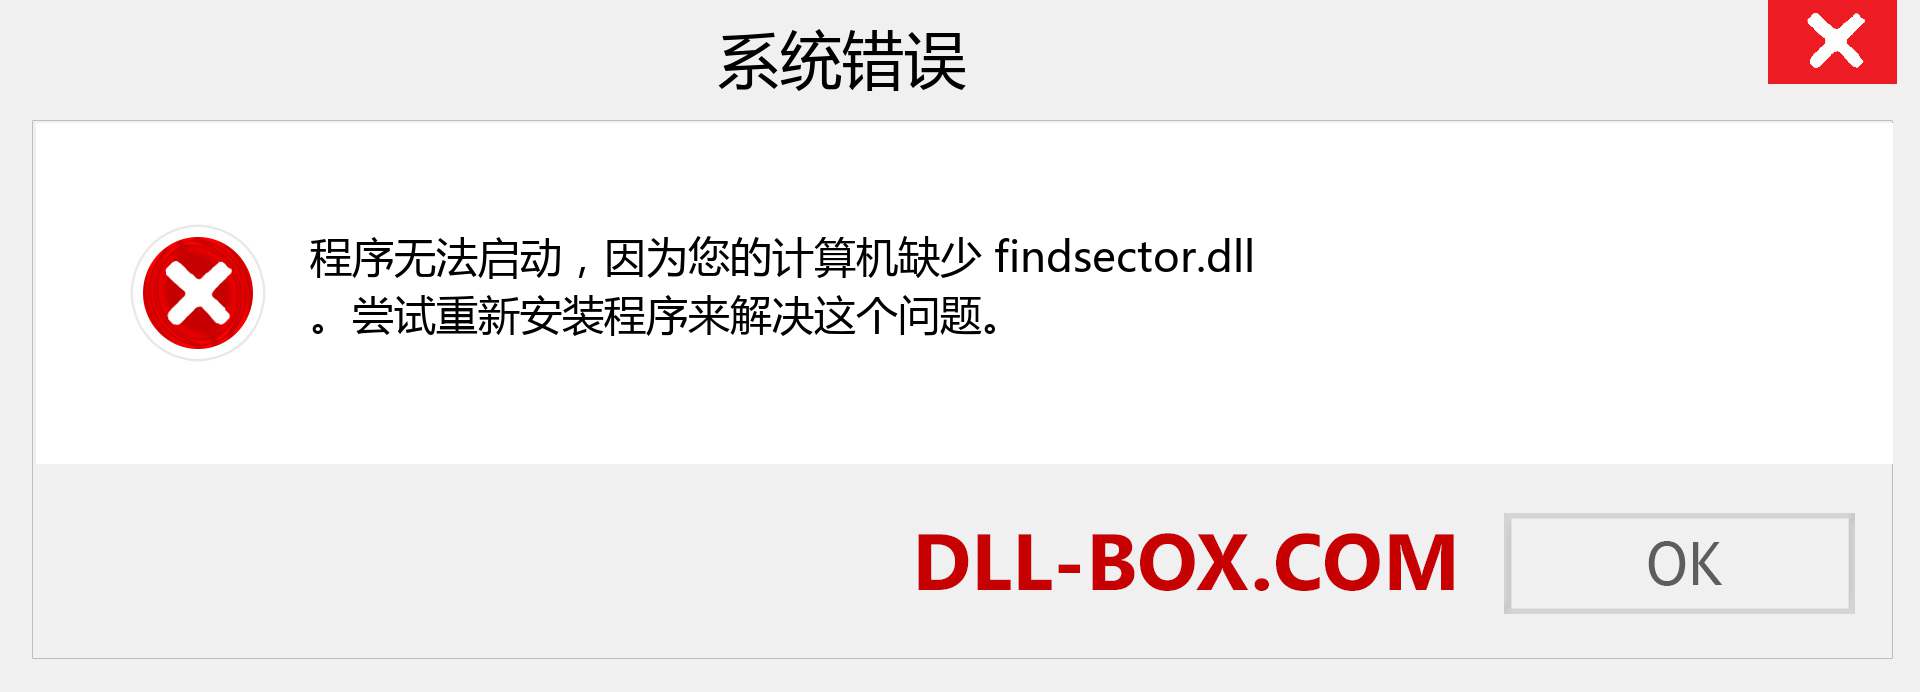 findsector.dll 文件丢失？。 适用于 Windows 7、8、10 的下载 - 修复 Windows、照片、图像上的 findsector dll 丢失错误